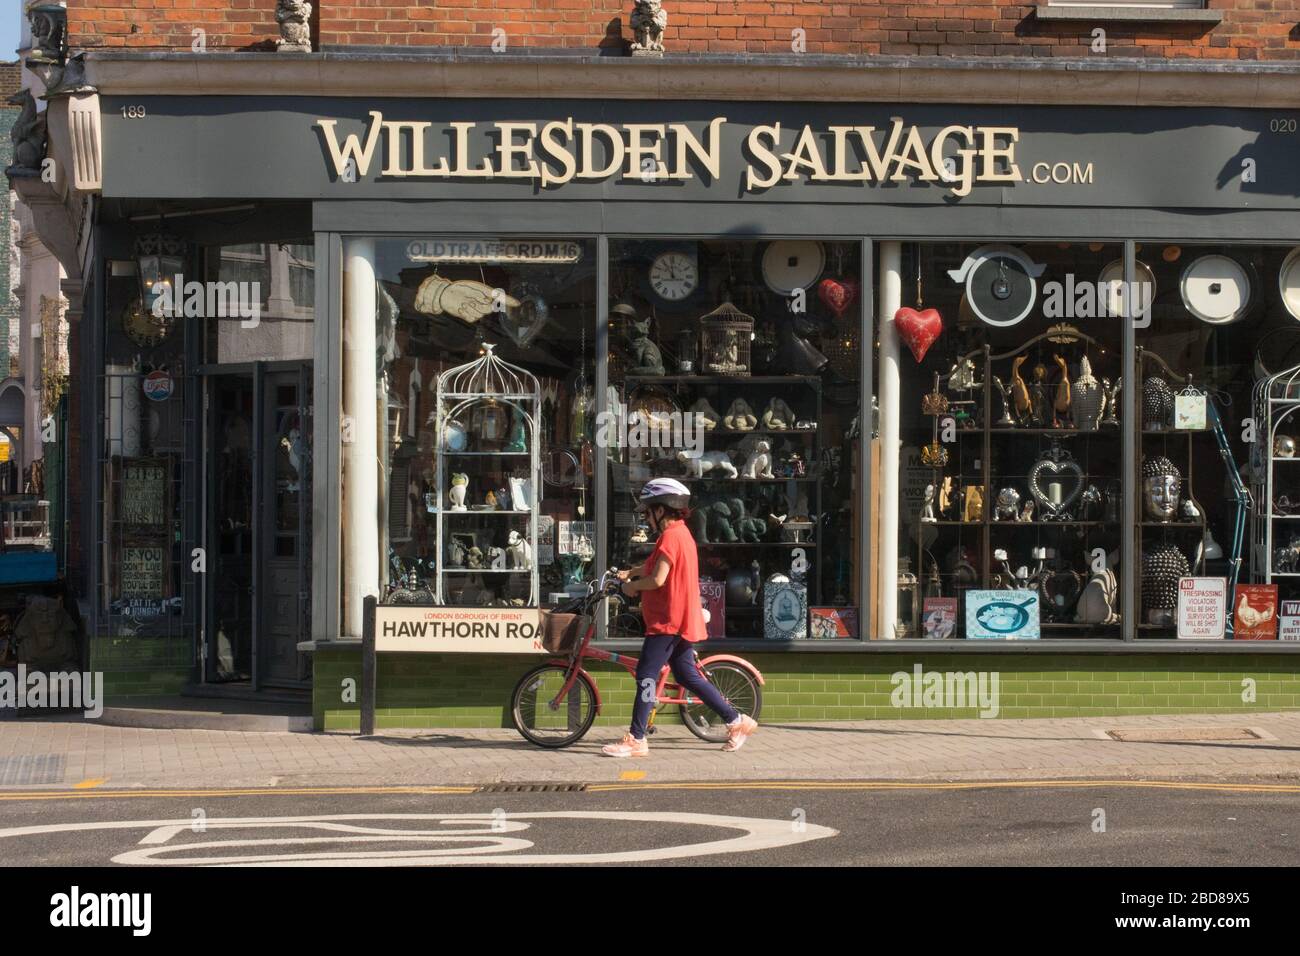 Willesden Salvage Stock Photo